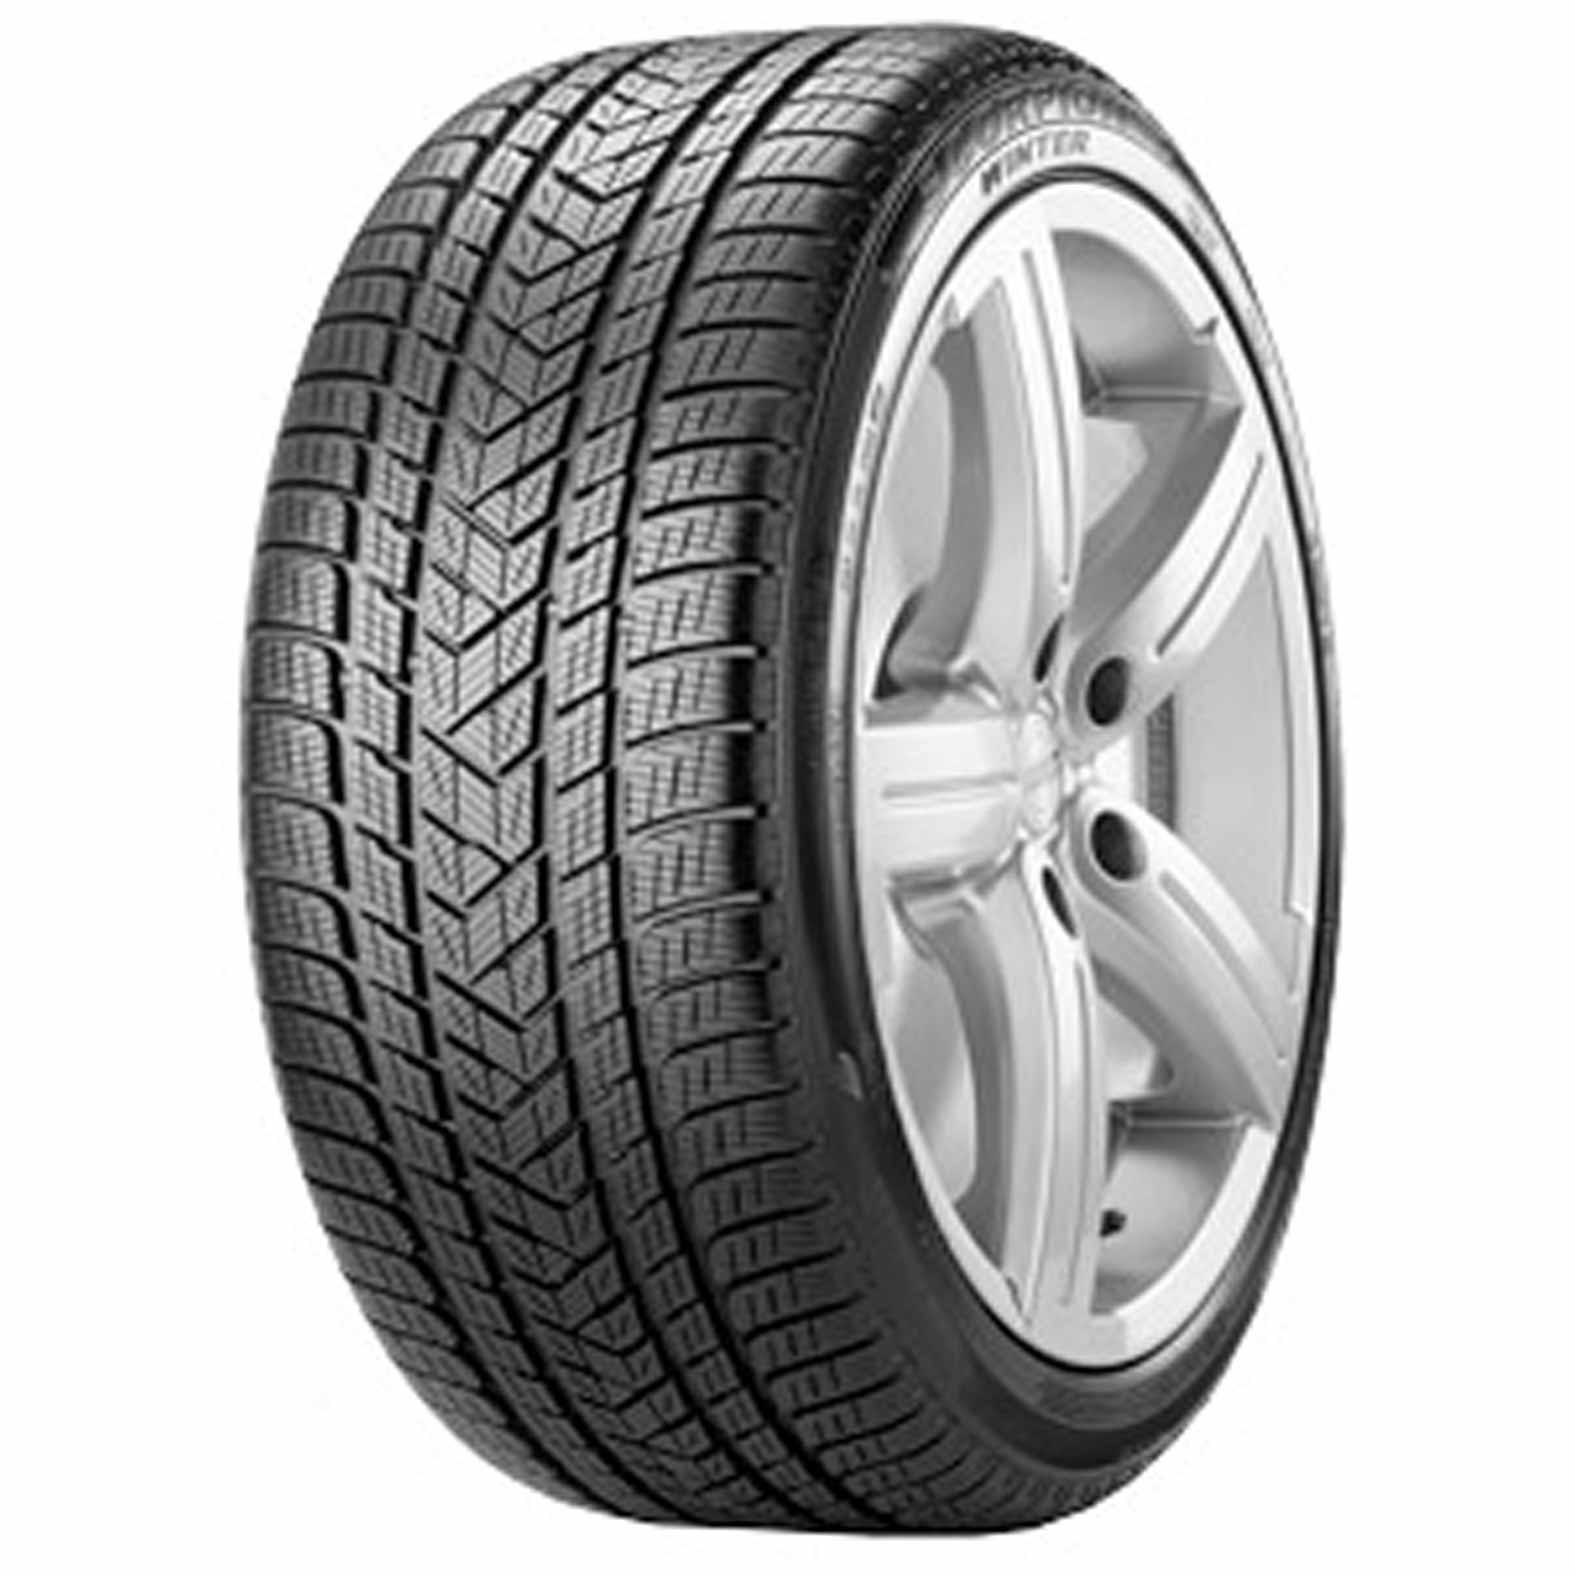 Pirelli Scorpion Winter Tires for Winter | Kal Tire